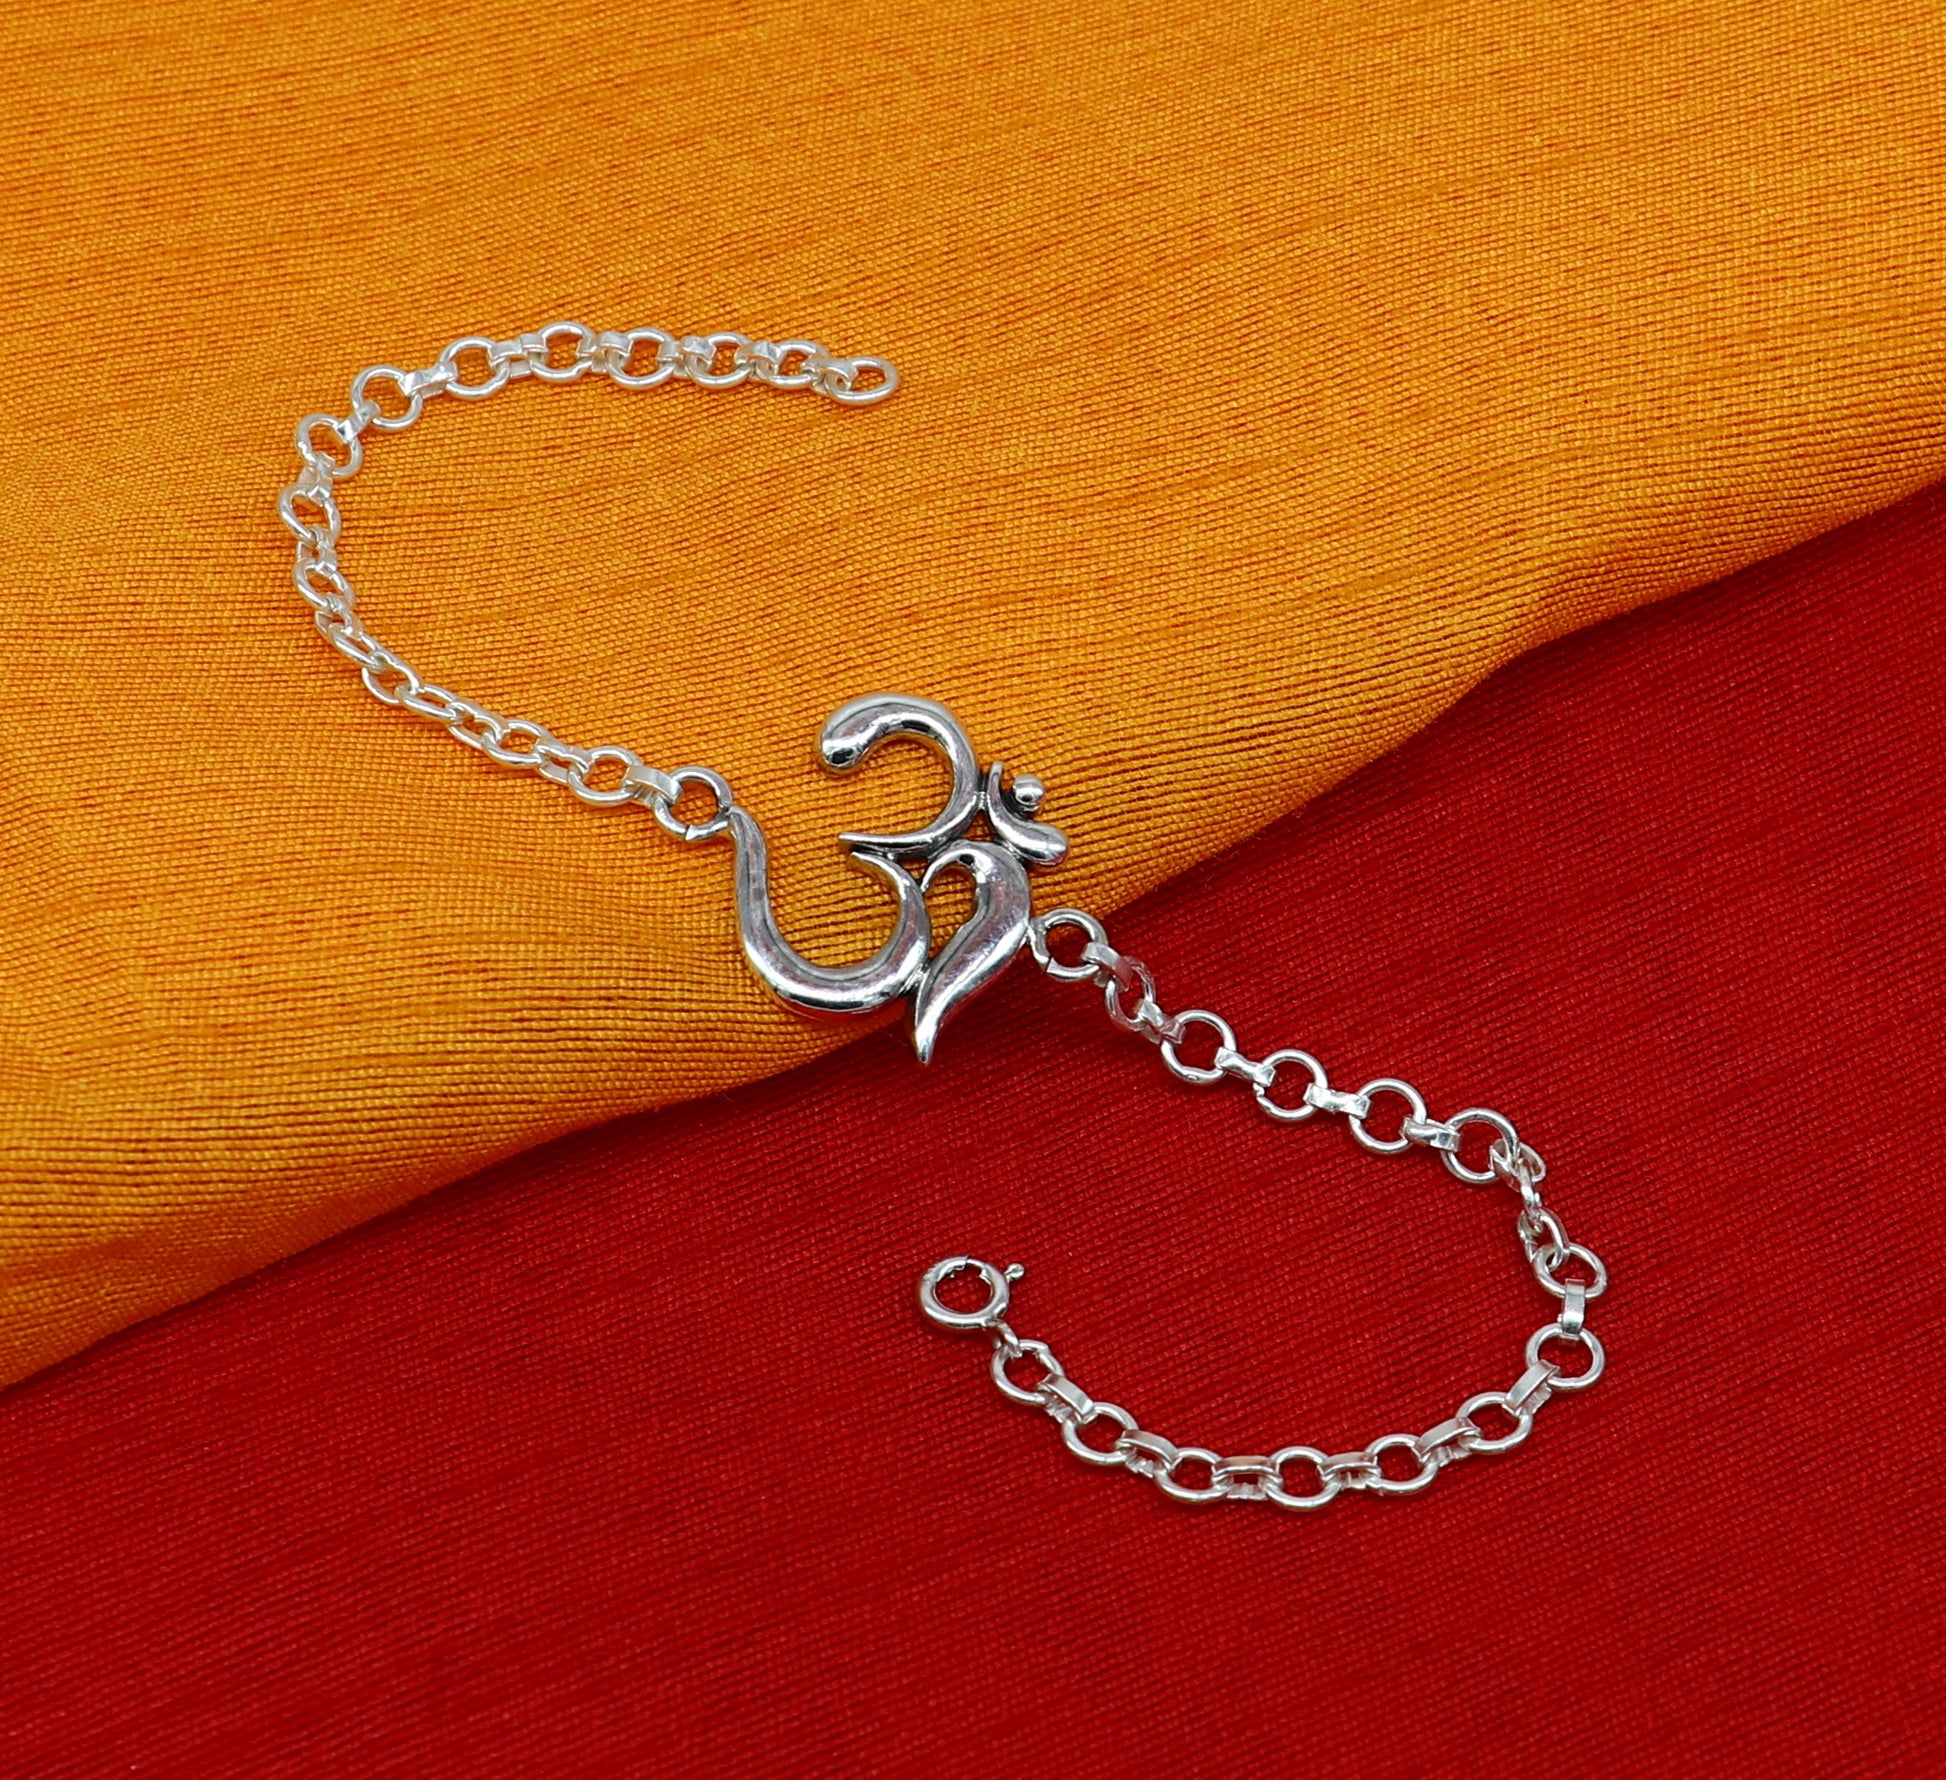 All sizes 925 sterling silver handmade Aum(OM) mantra design Rakhi Bracelet, amazing stylish gift for Rakshabandhan bracelet rk180 - TRIBAL ORNAMENTS